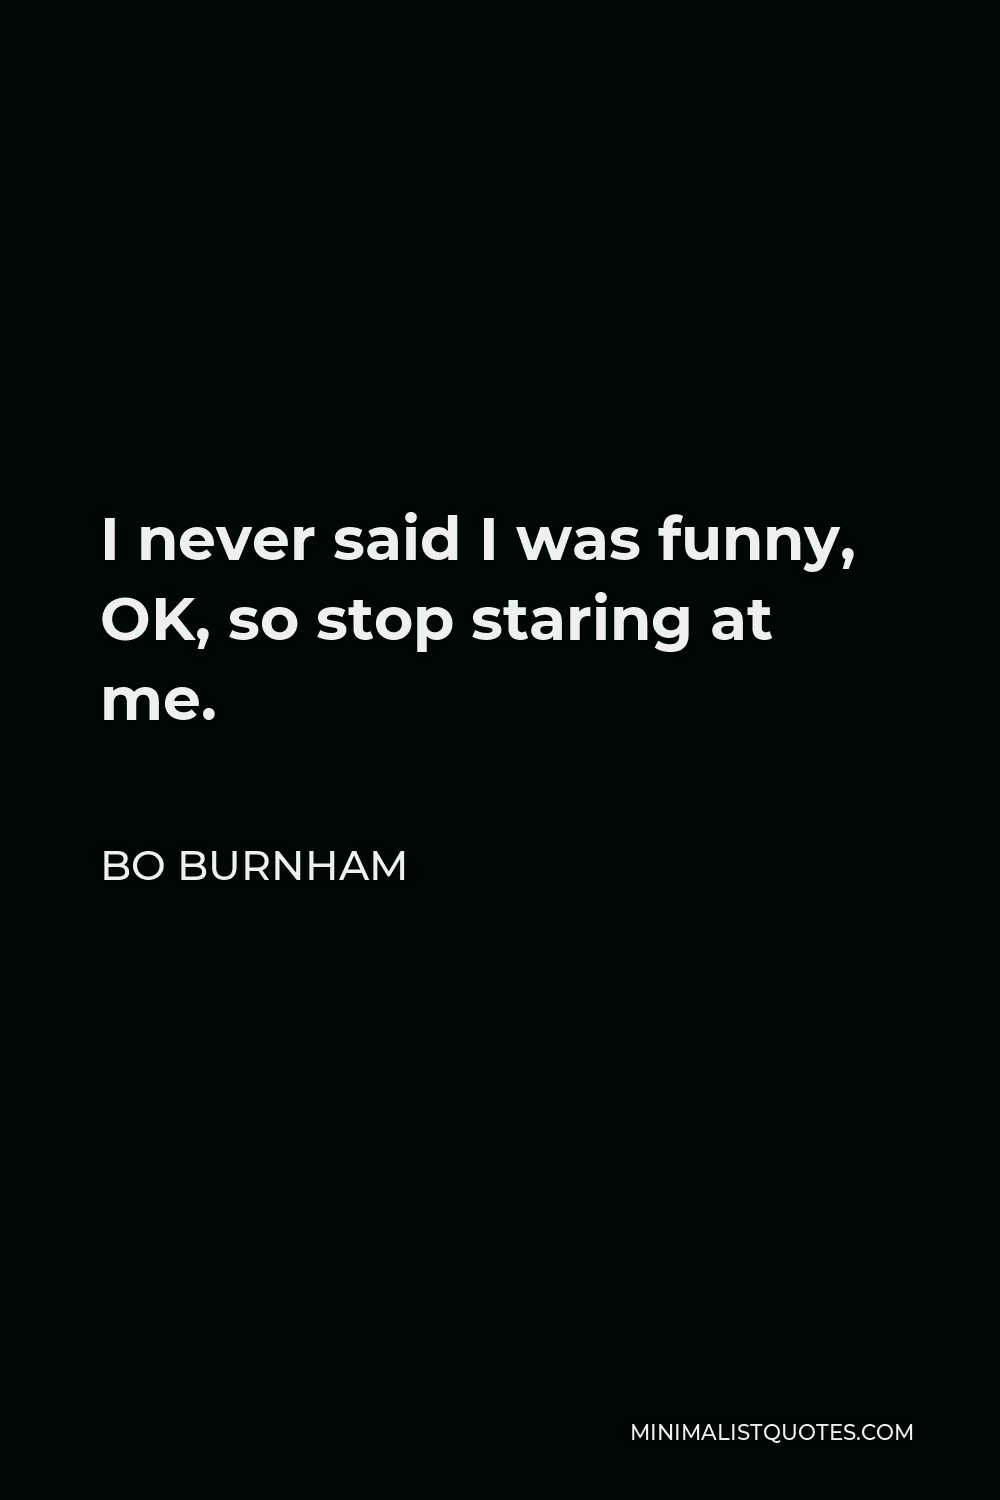 Bo Burnham Quote - I never said I was funny, OK, so stop staring at me.